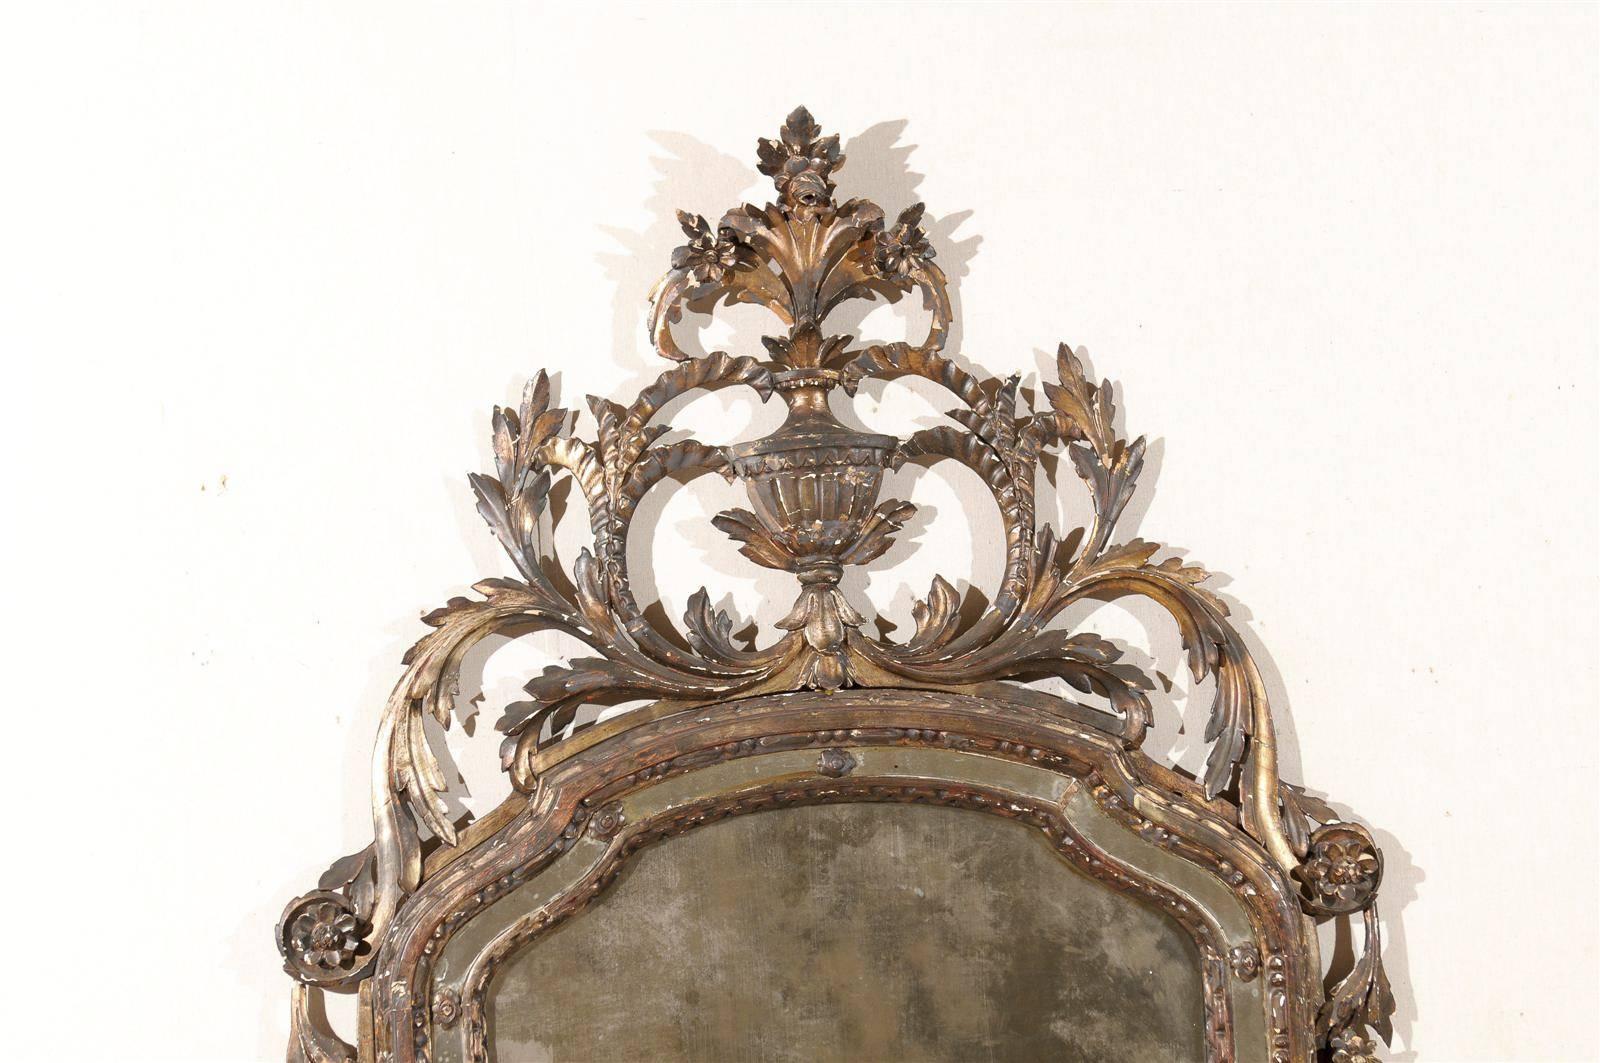 Italian 19th Century Italian Wooden Mirror with Exquisite Crest Carving 2